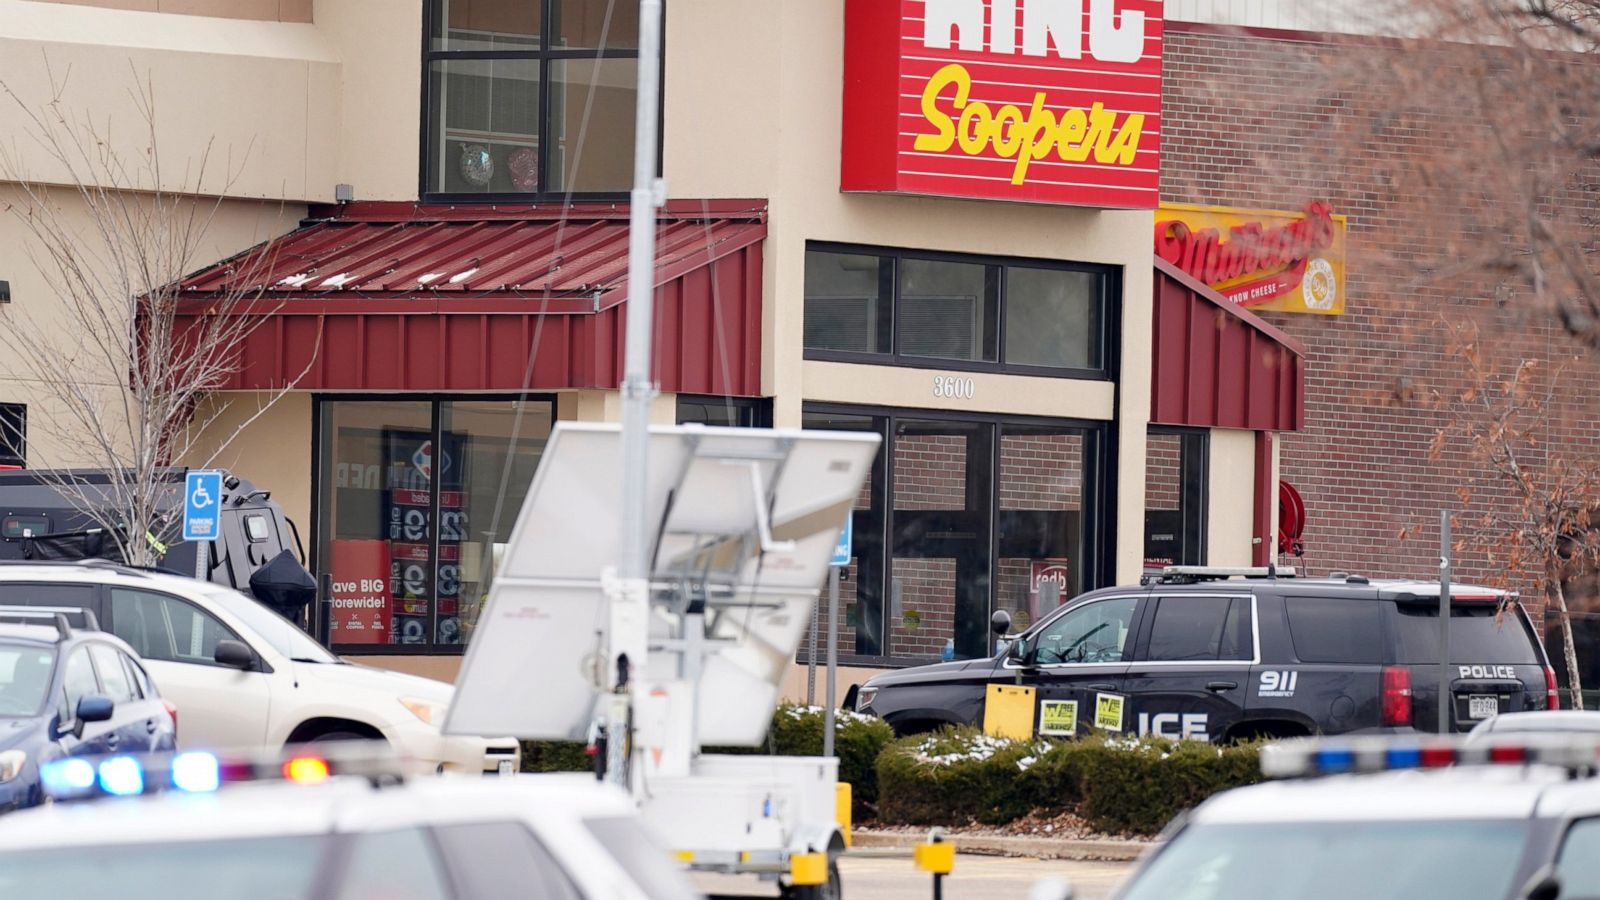 10 Killed in Supermarket Shooting in Boulder, Colorado